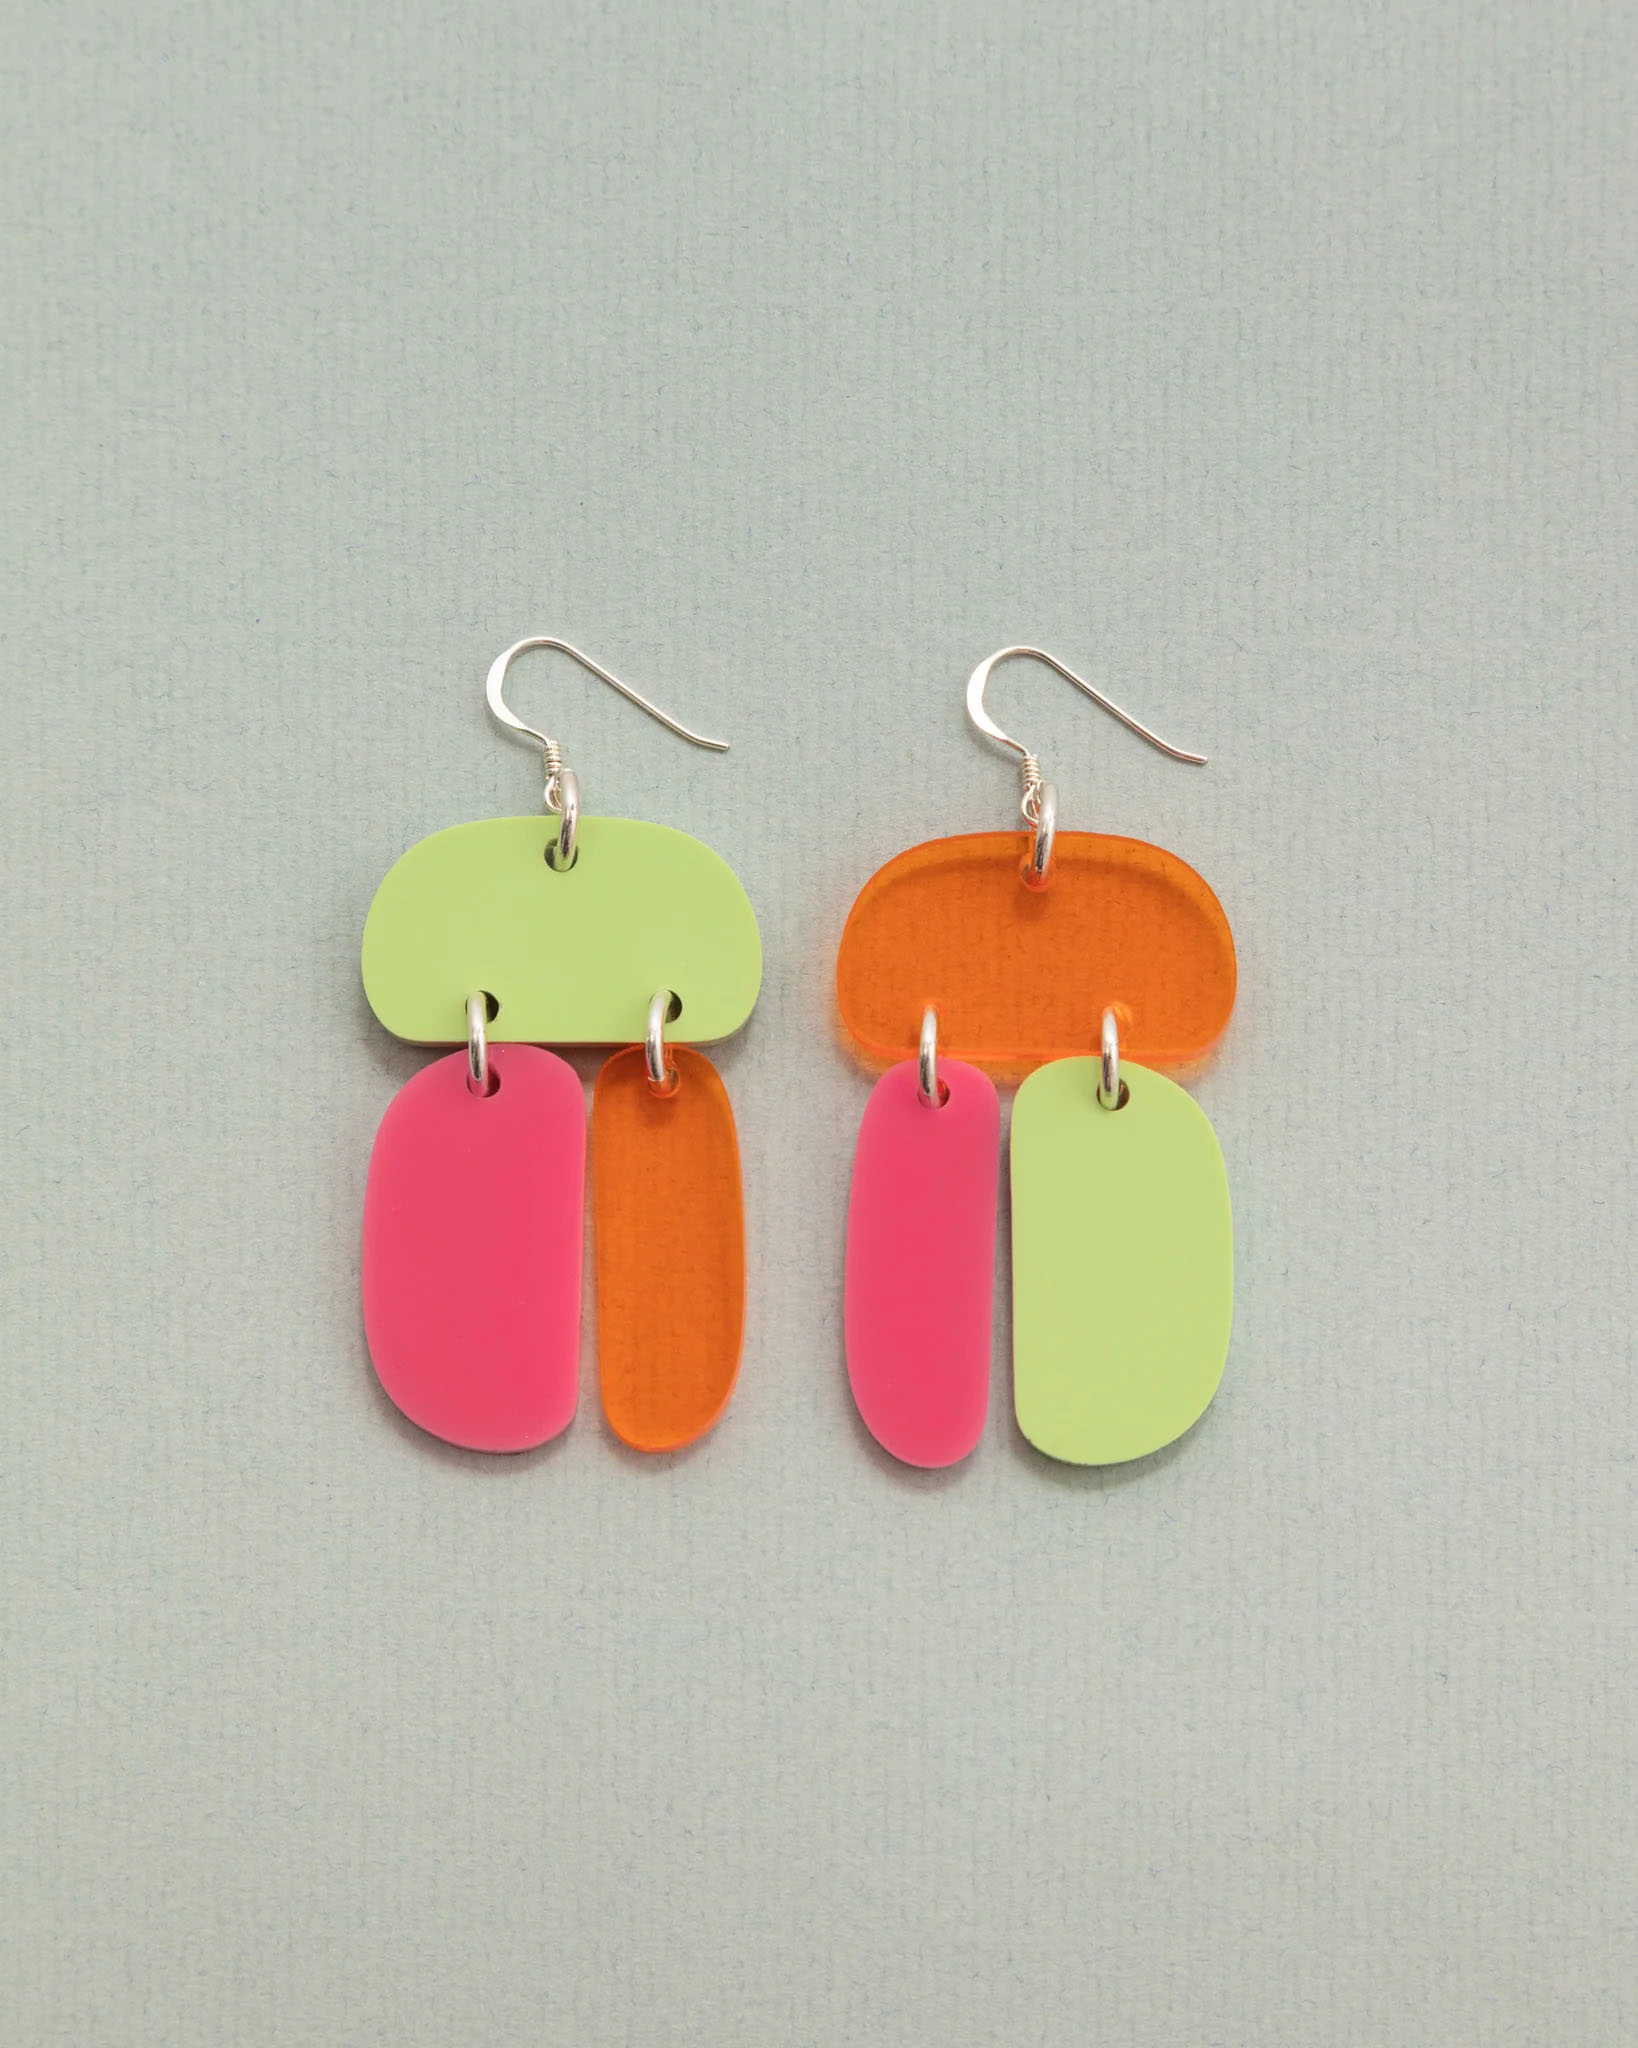 A pair of acrylic earrings on a plain background